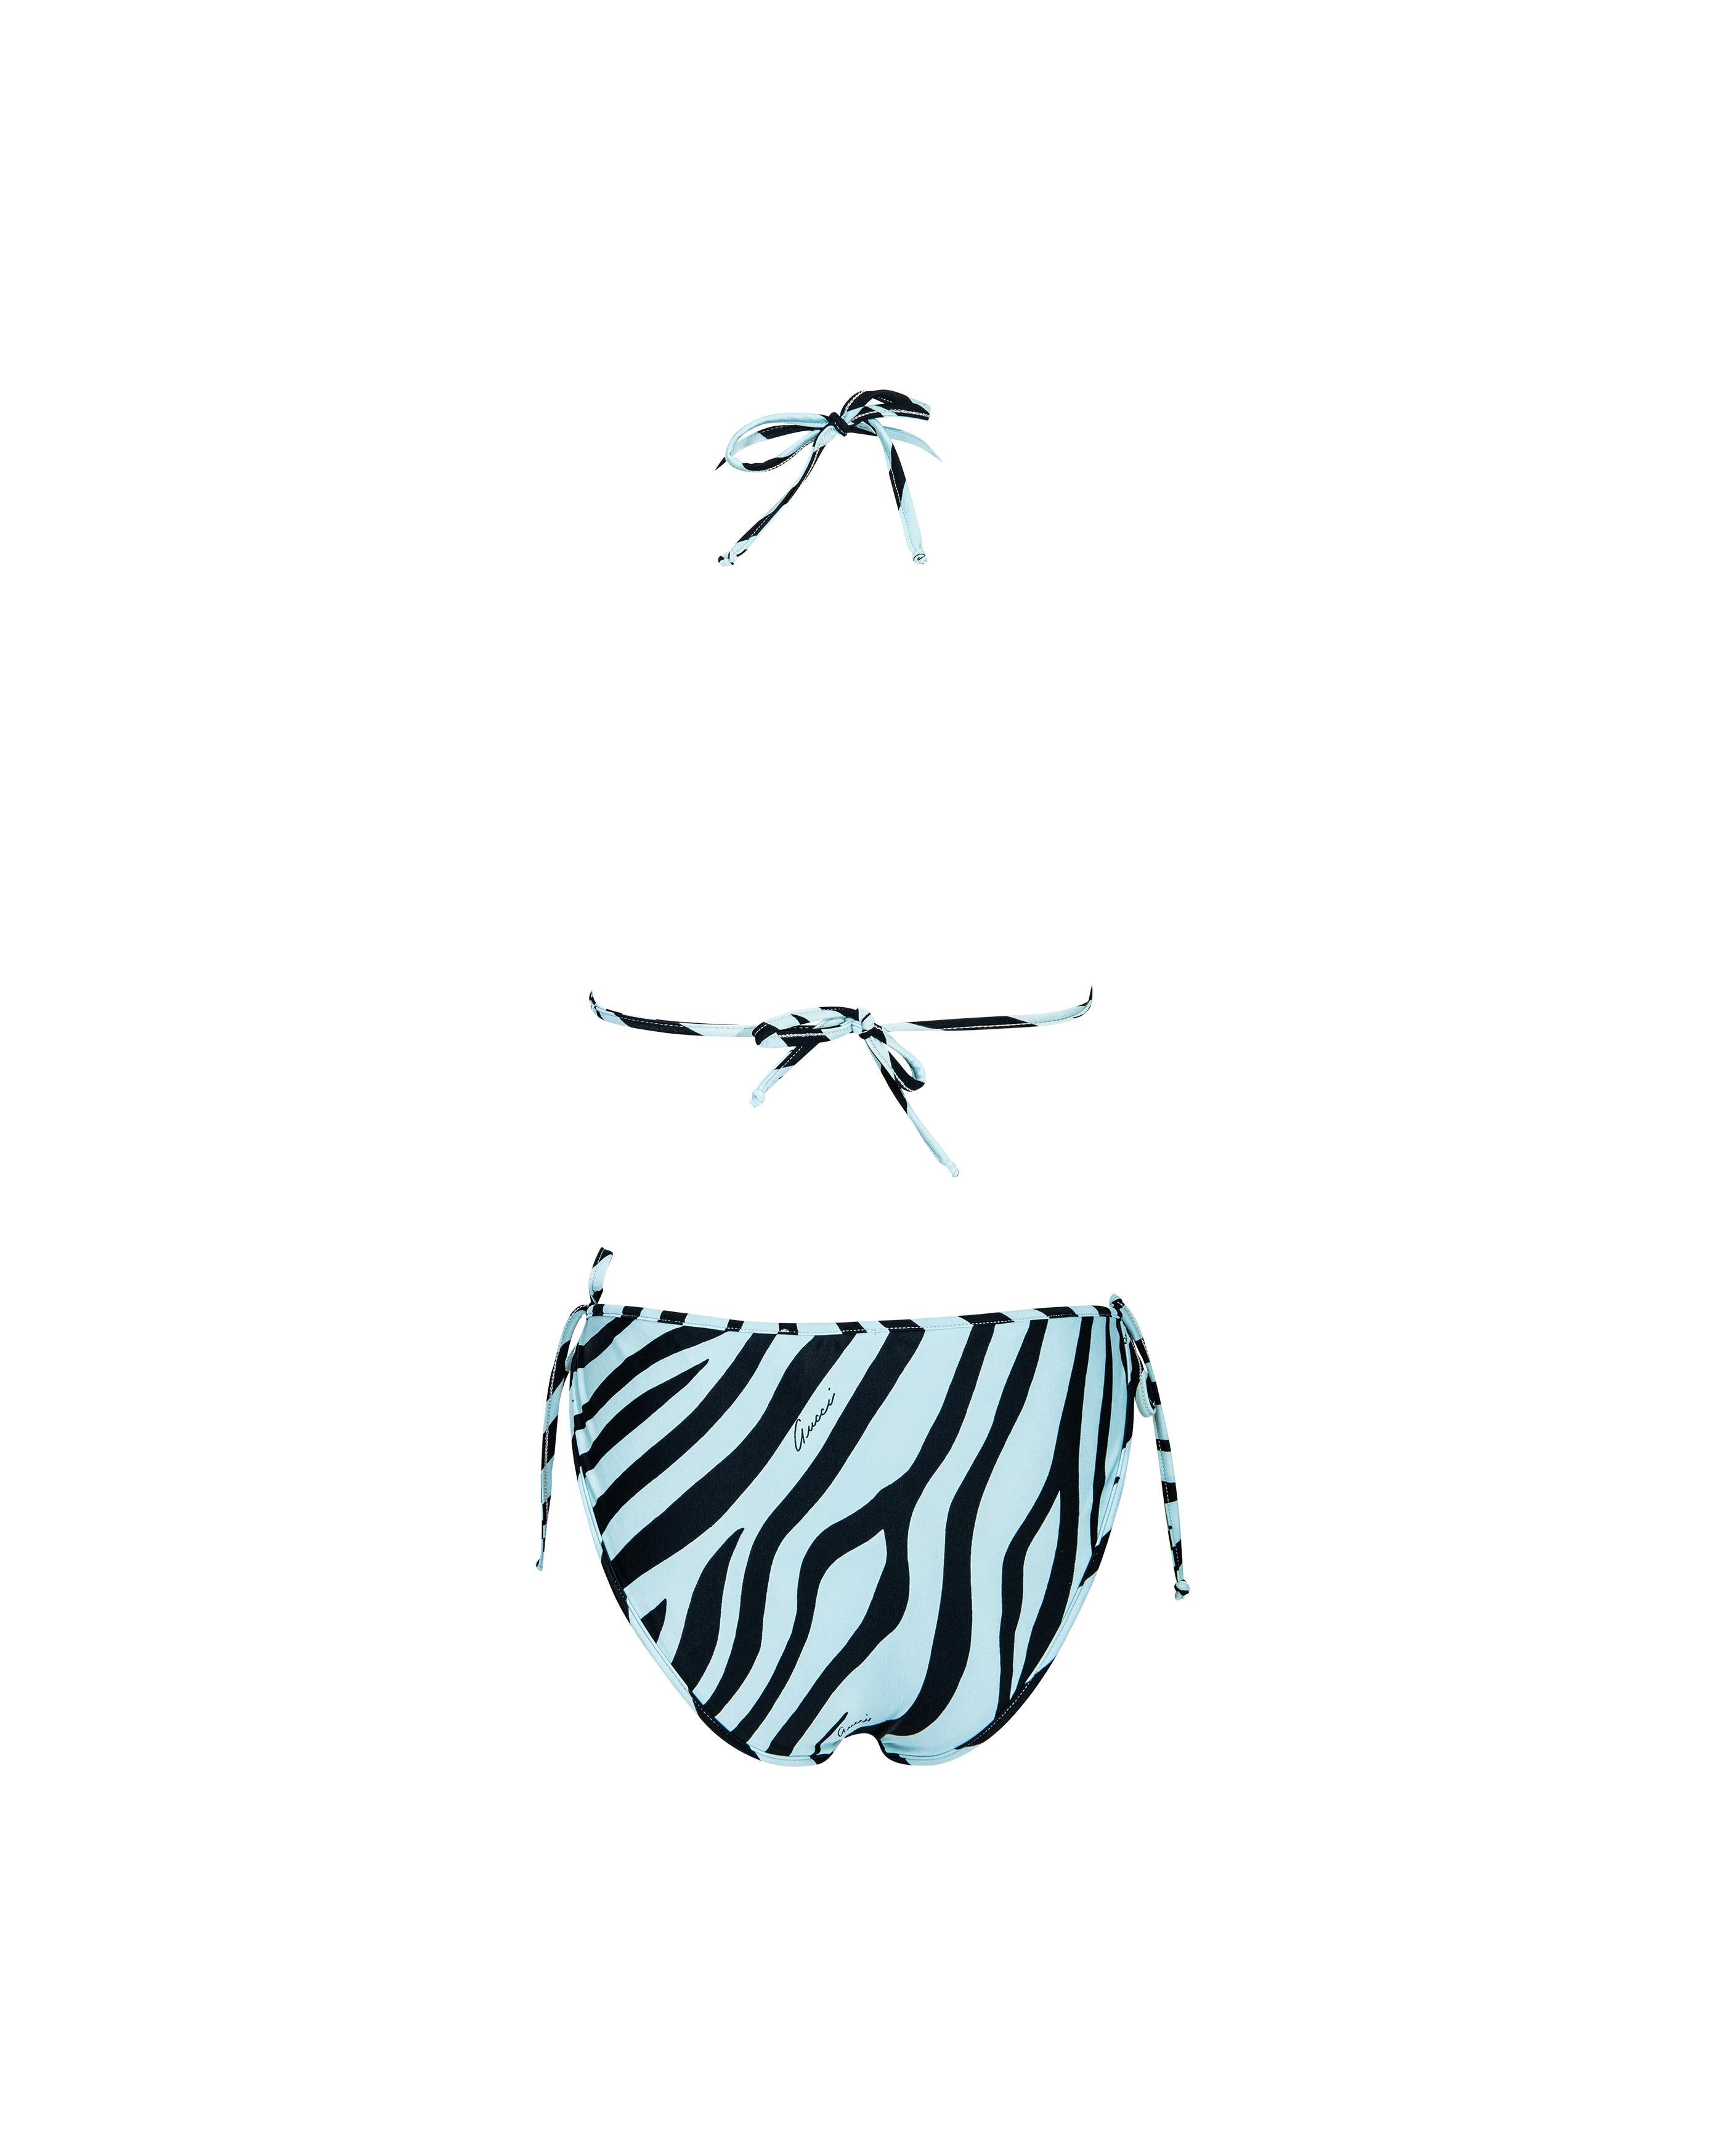 S/S 1996 Gucci by Tom Ford Blue and Black Zebra Print String Bikini For Sale 1